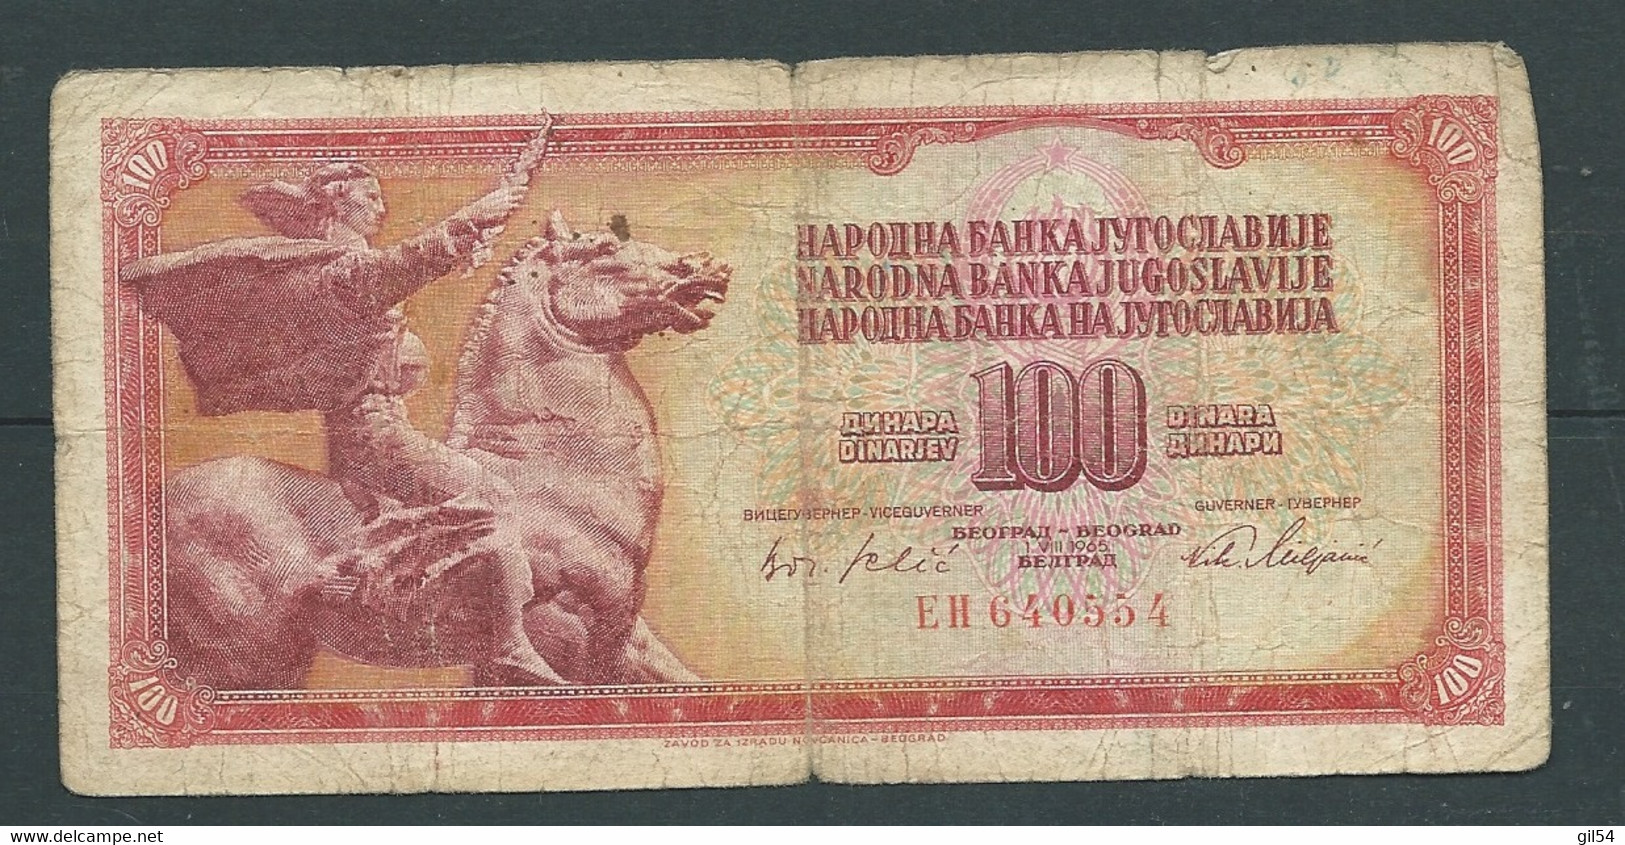 Billet Yougoslavie 100 Dinars Année 1965 EH640554 - ETAT D'USAGE   LAURA 9608 - Jugoslavia